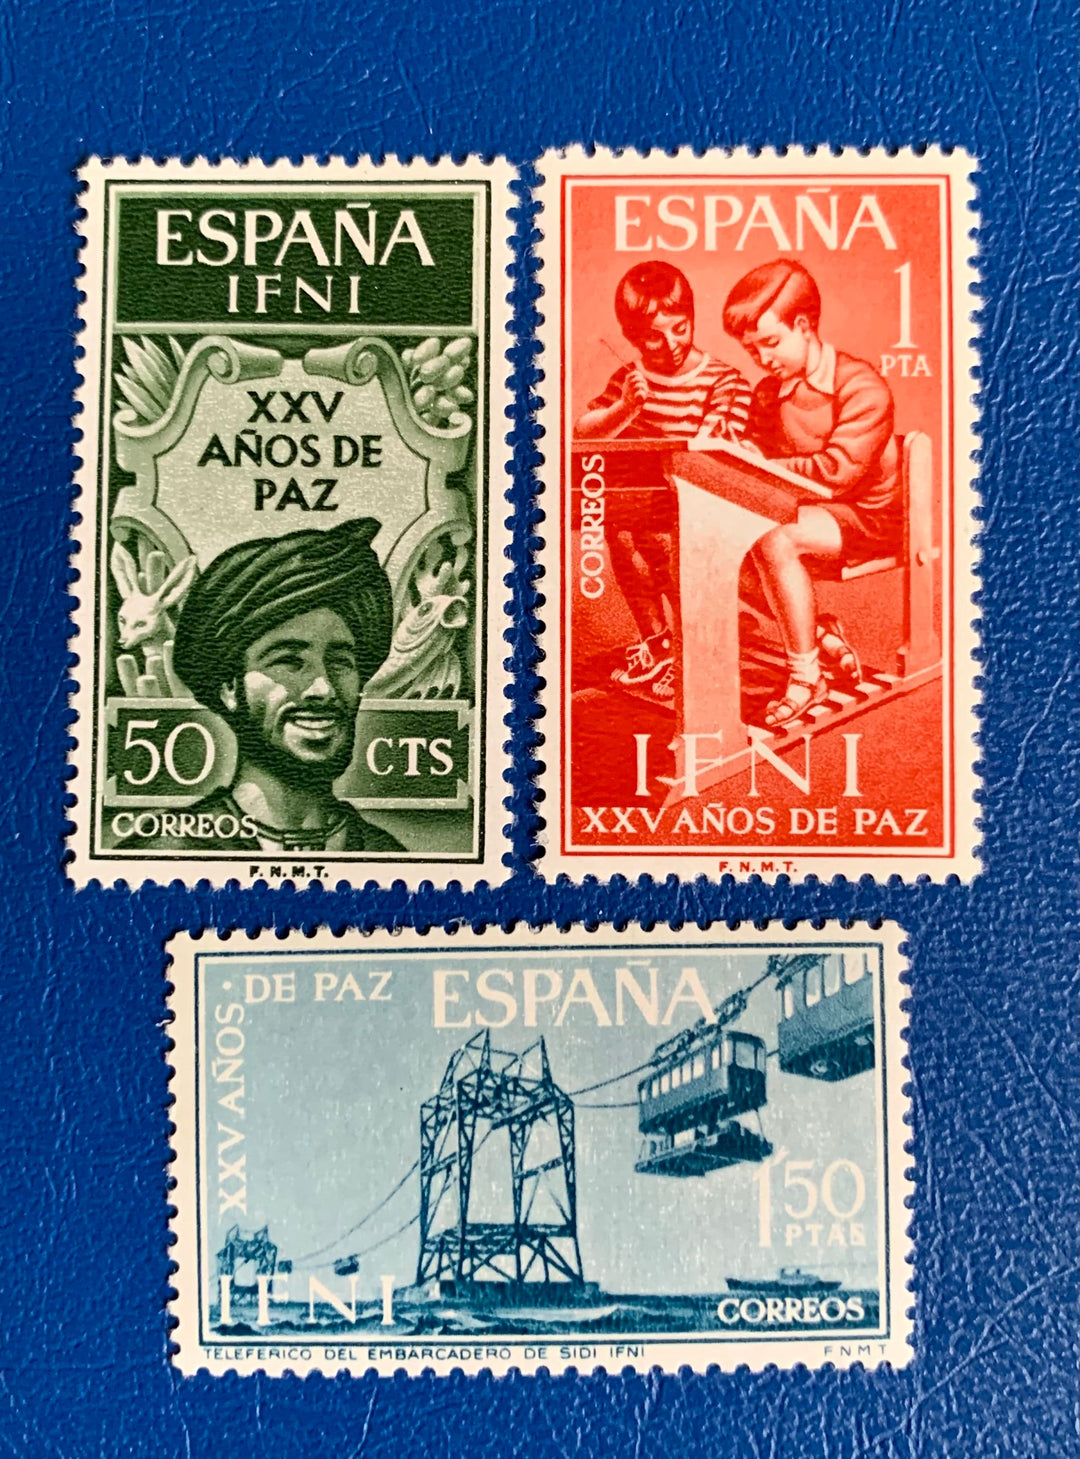 Sp. Ifni- Original Vintage Postage Stamps- 1965 - 25 Years of Peace